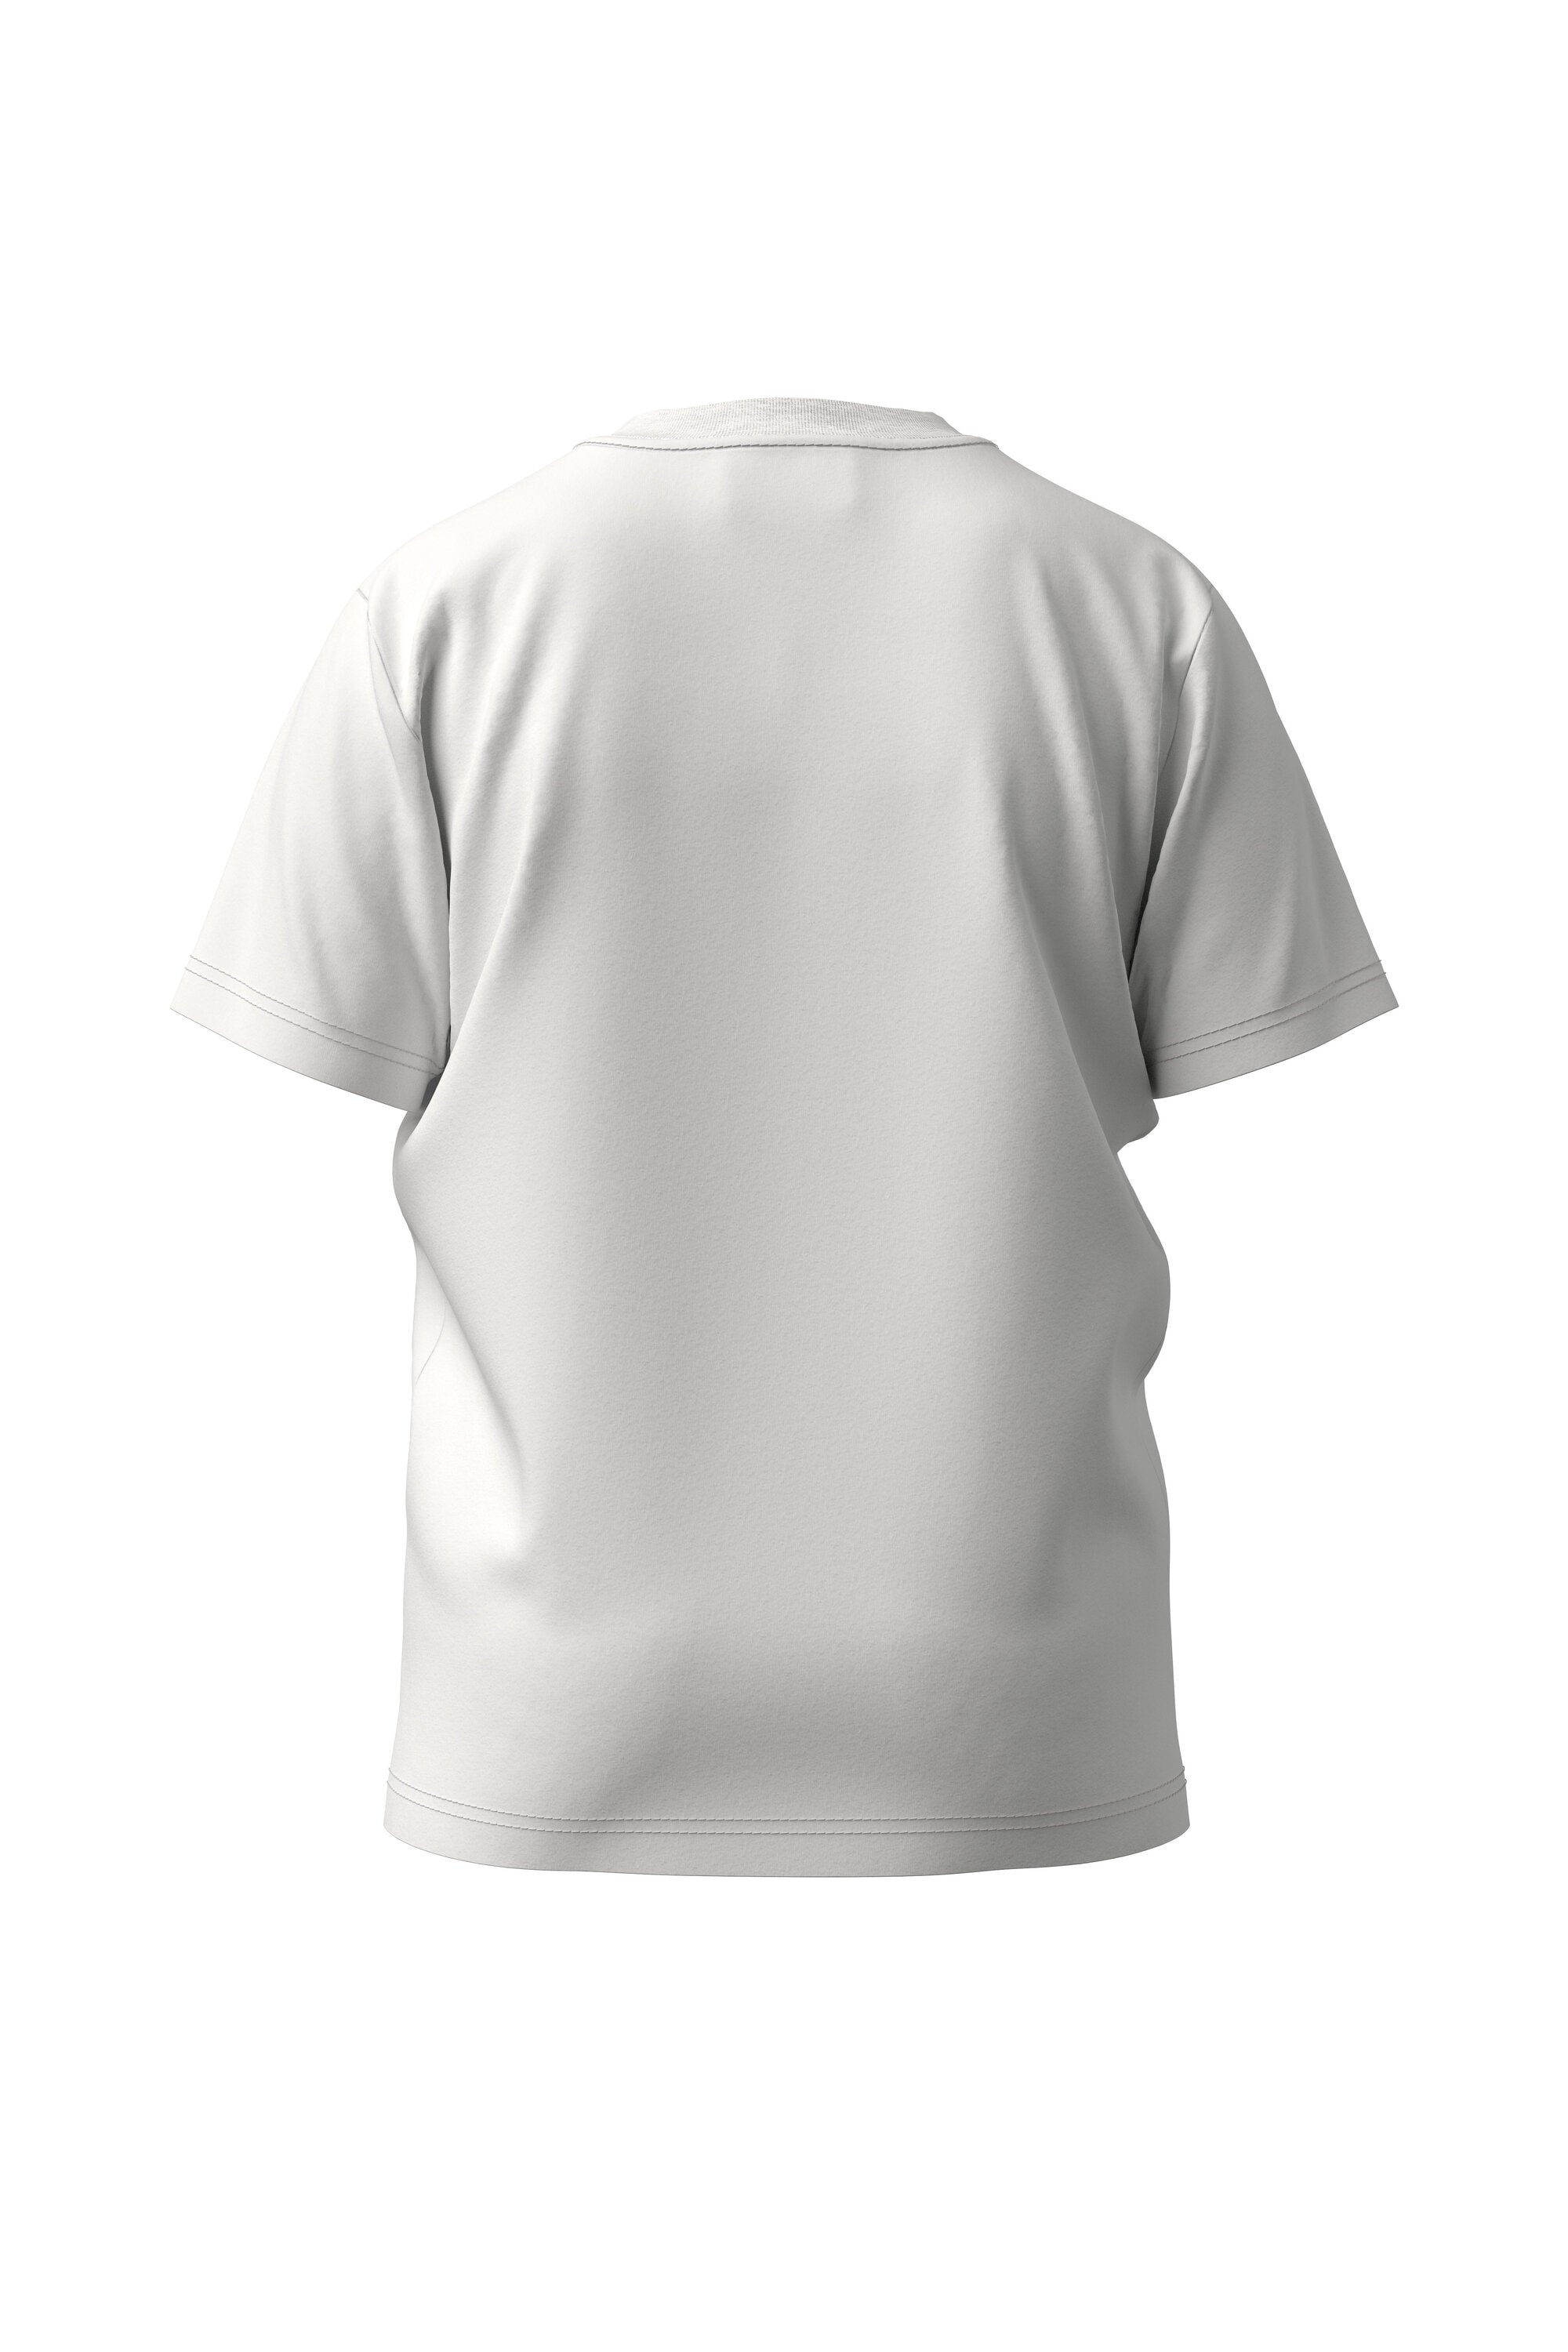 White jersey undershirt with logo